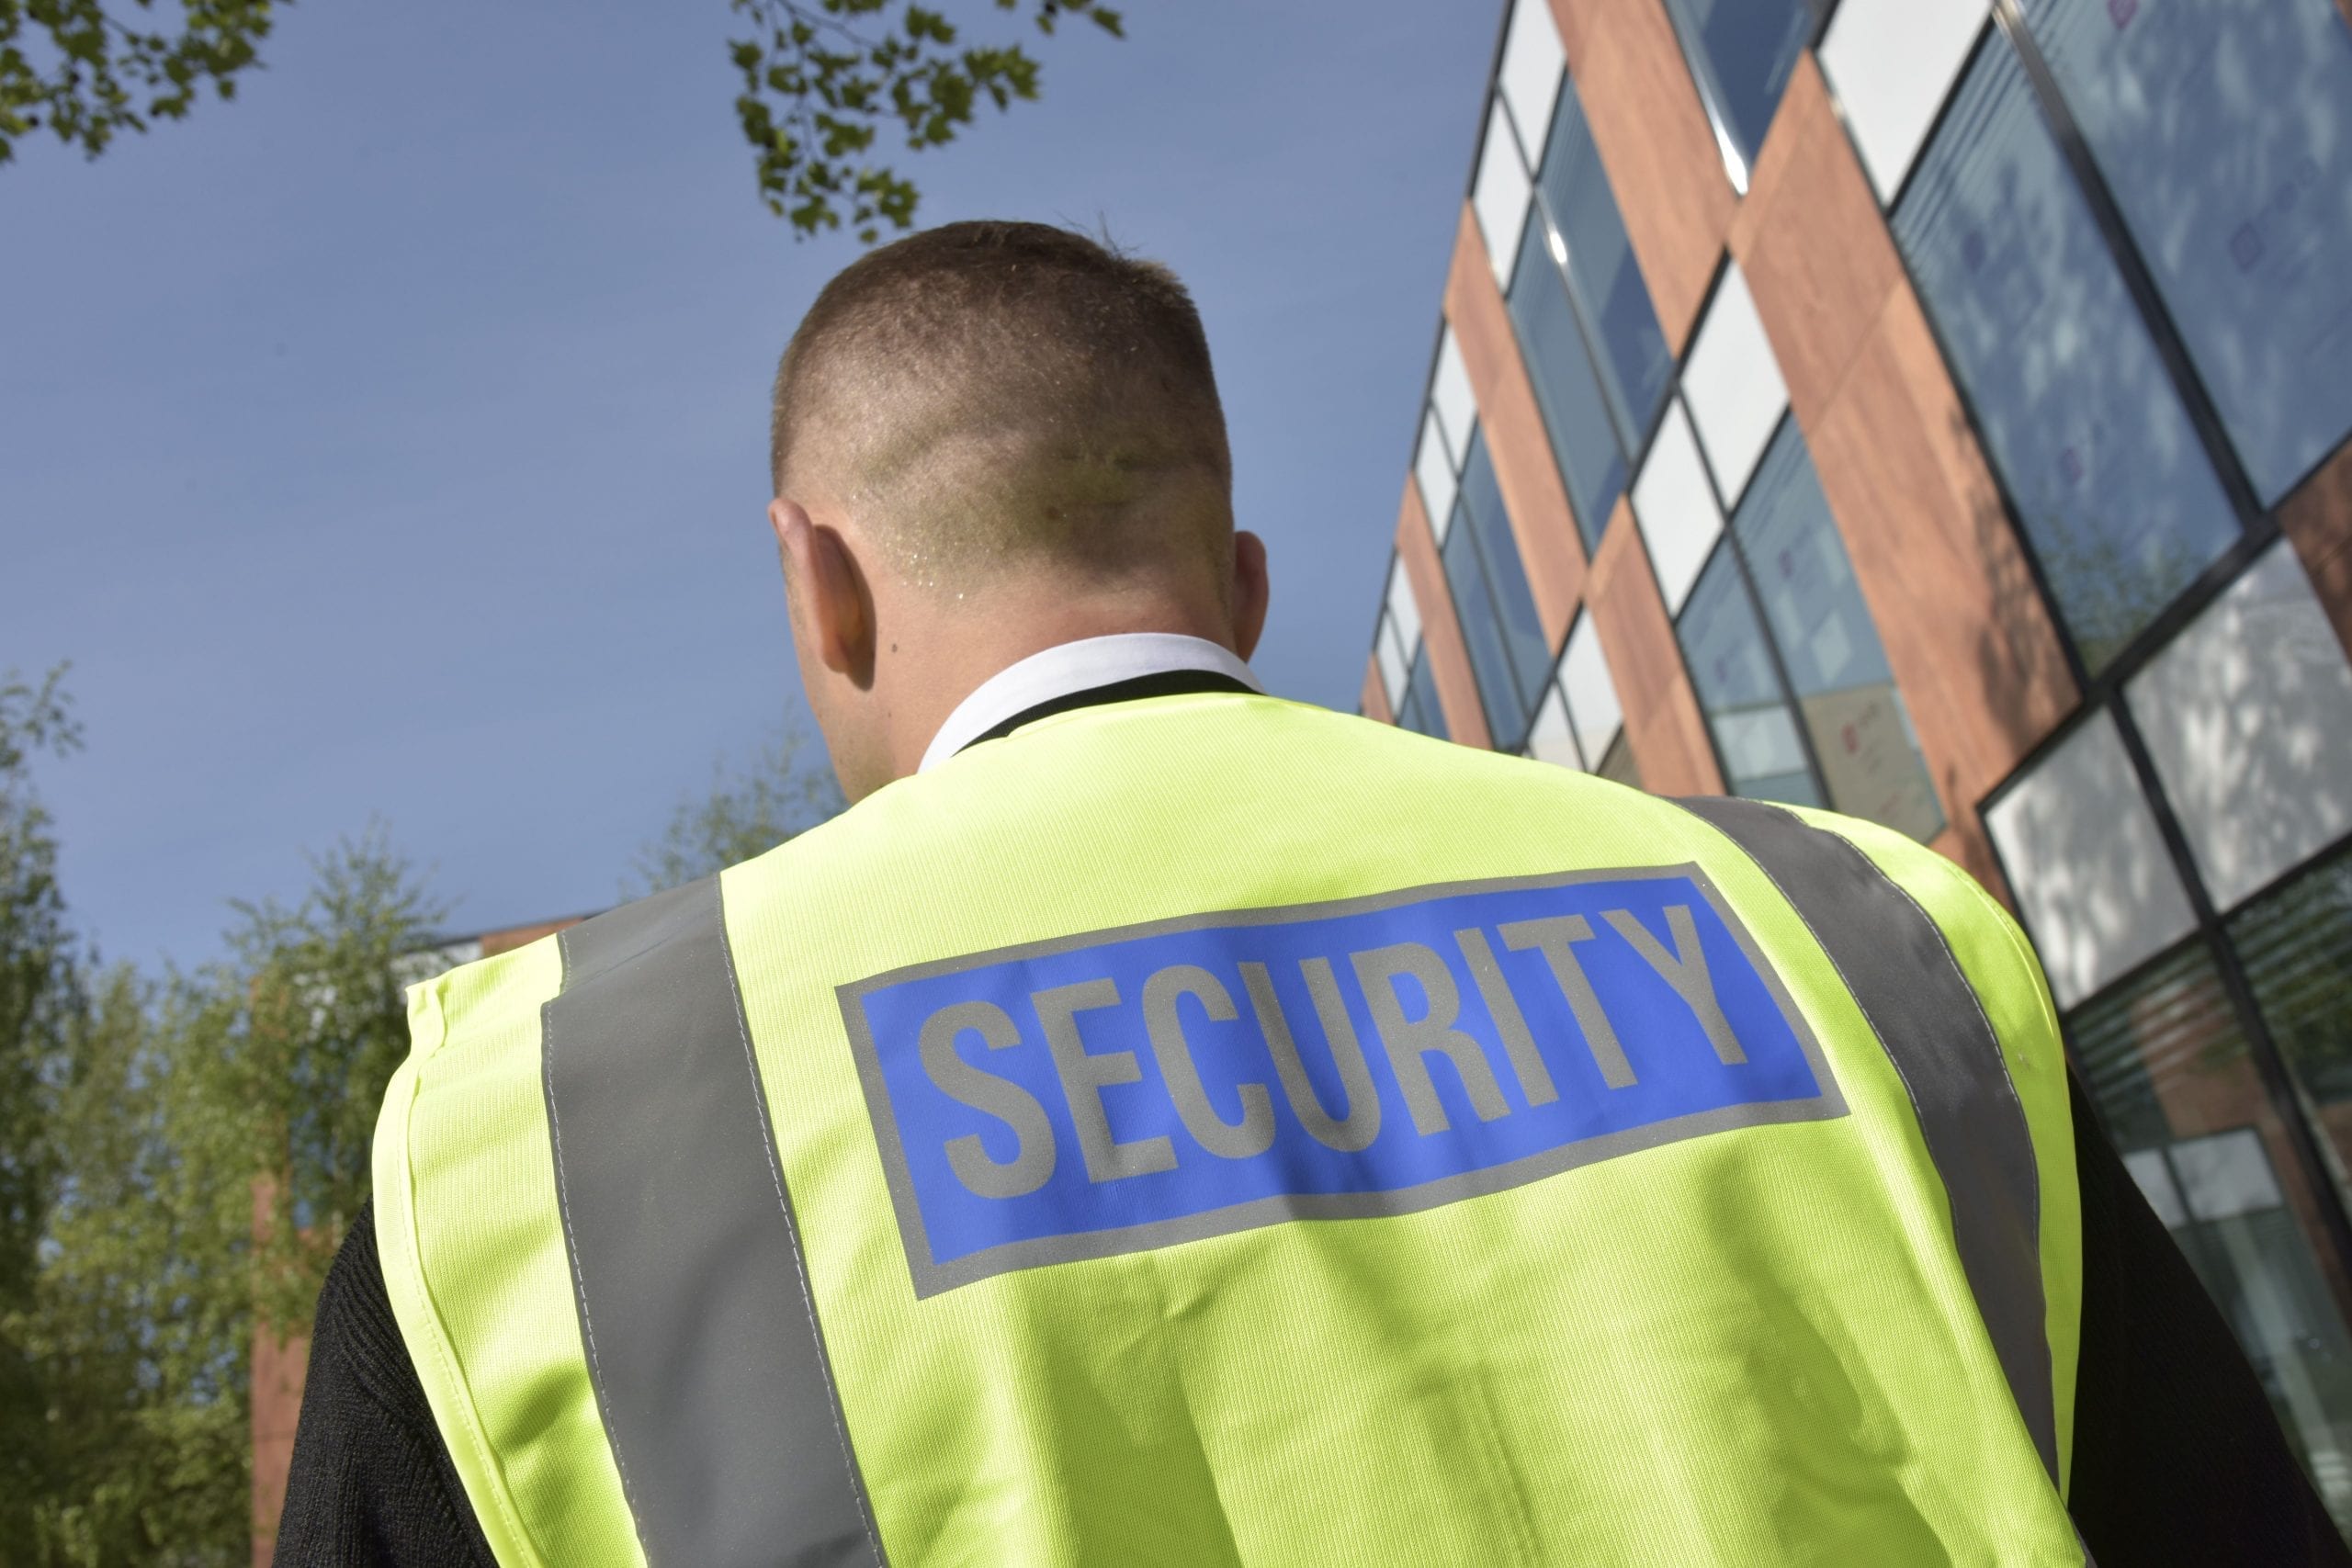 Weekend security officer jobs in london